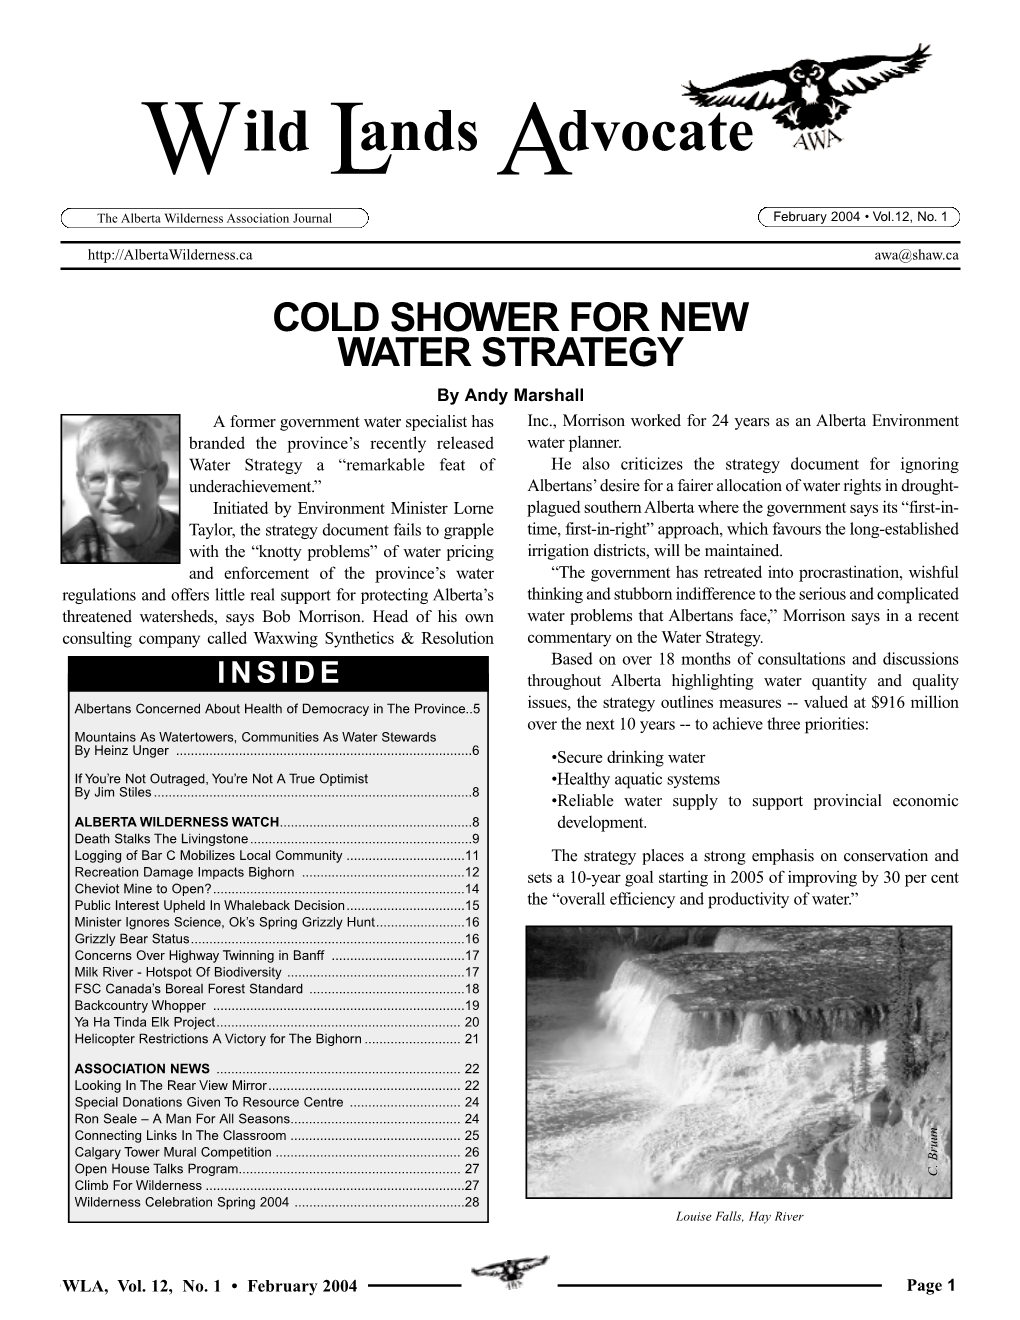 Wild Lands Advocate Vol. 12, No.1, February 2004